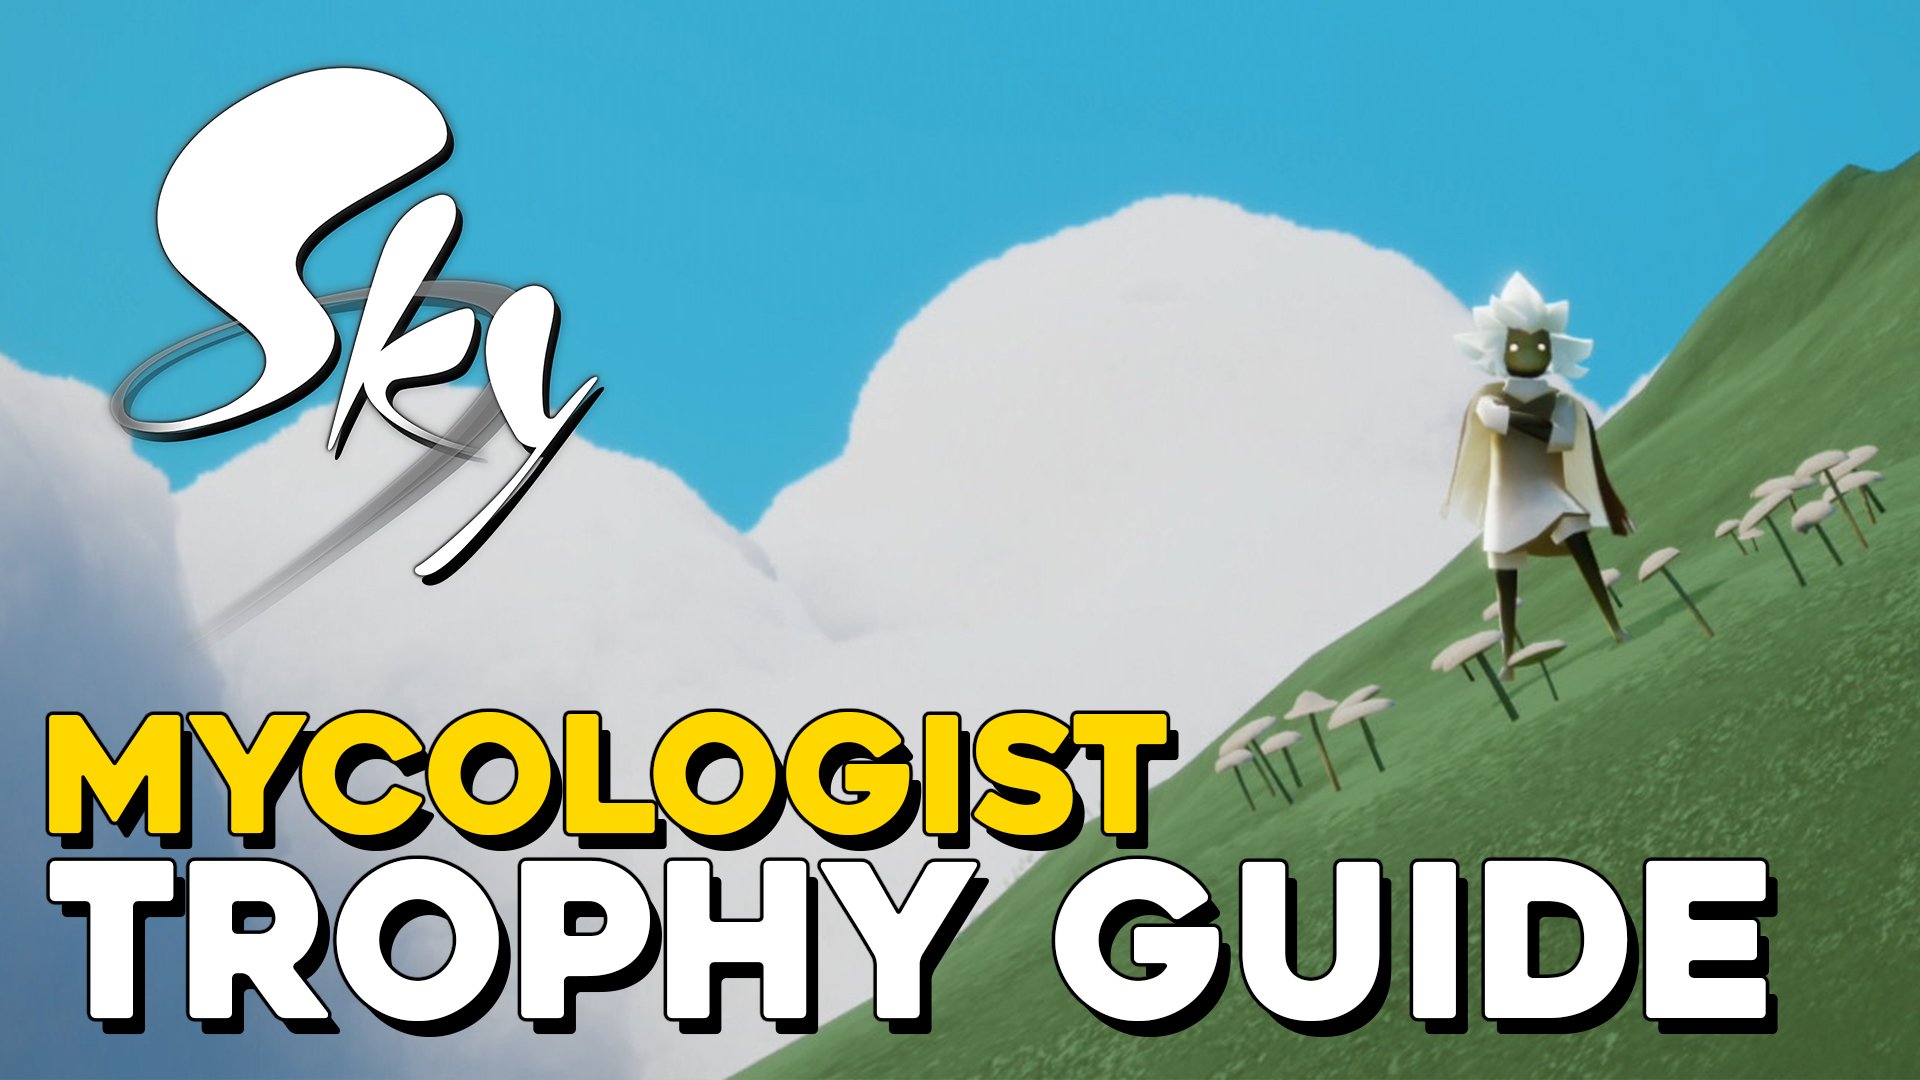 Sky Children Of The Light Mycologist Trophy Guide.jpg